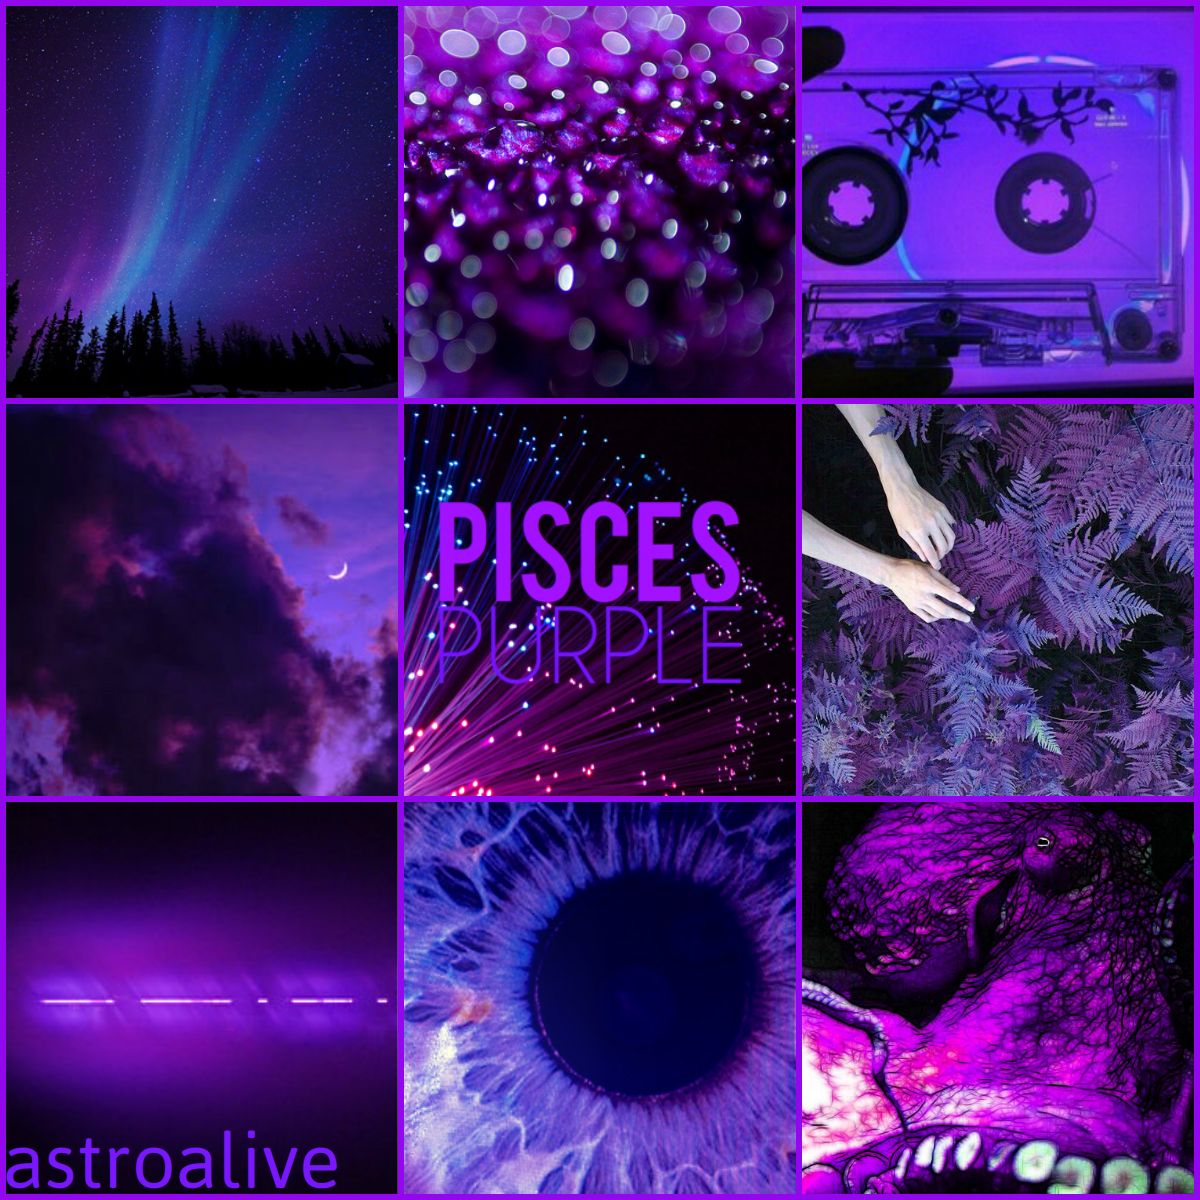 astroalive Pisces Zodiac signs pisces Dark purple aesthetic 1200x1200